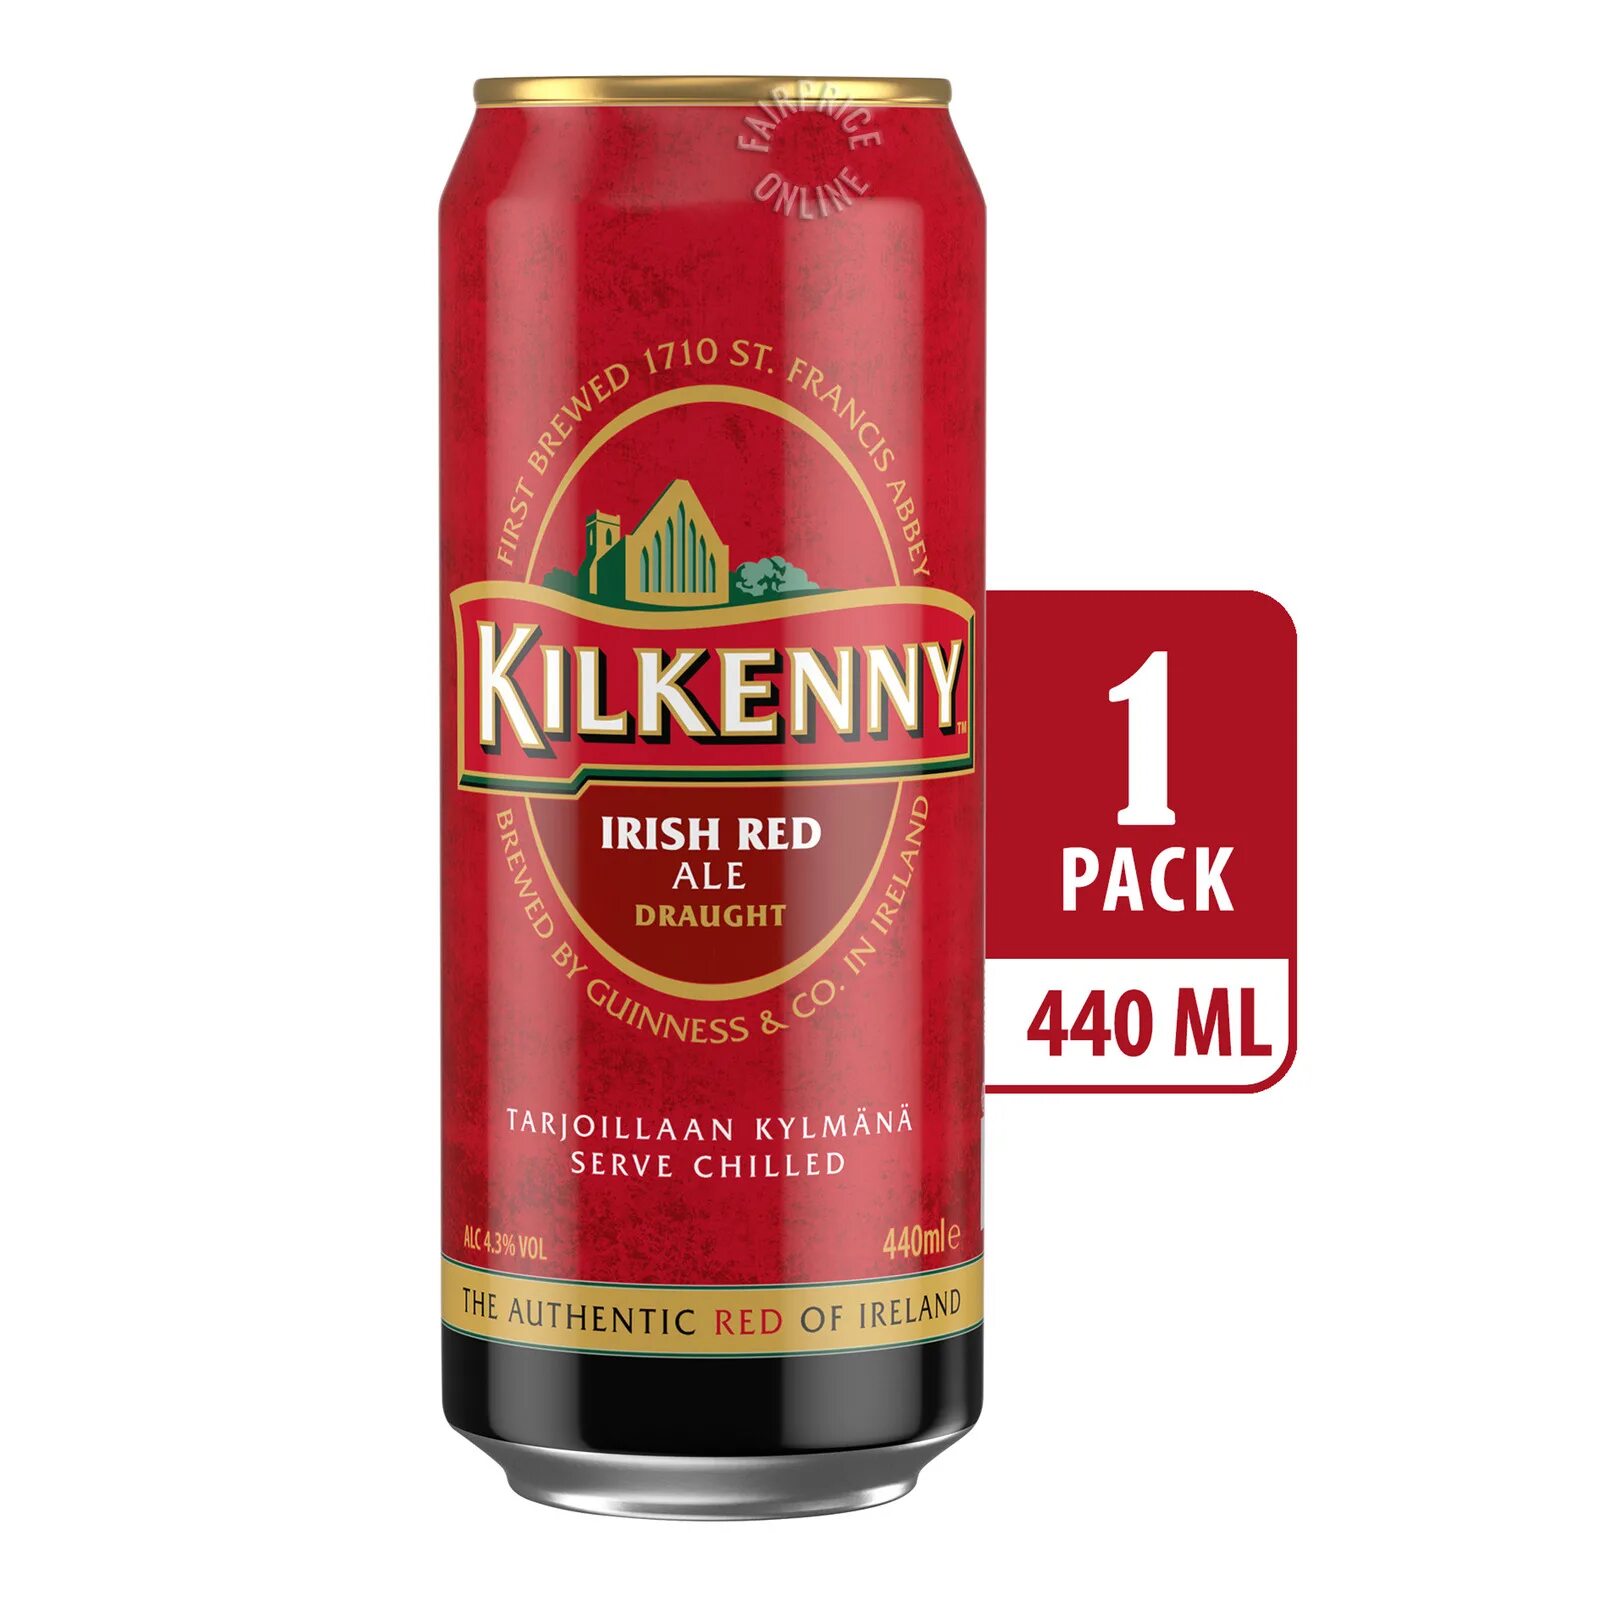 Irish red. Kilkenny Irish Red. Kilkenny Draught пиво. Kilkenny Red ale. Irish Red ale пиво.